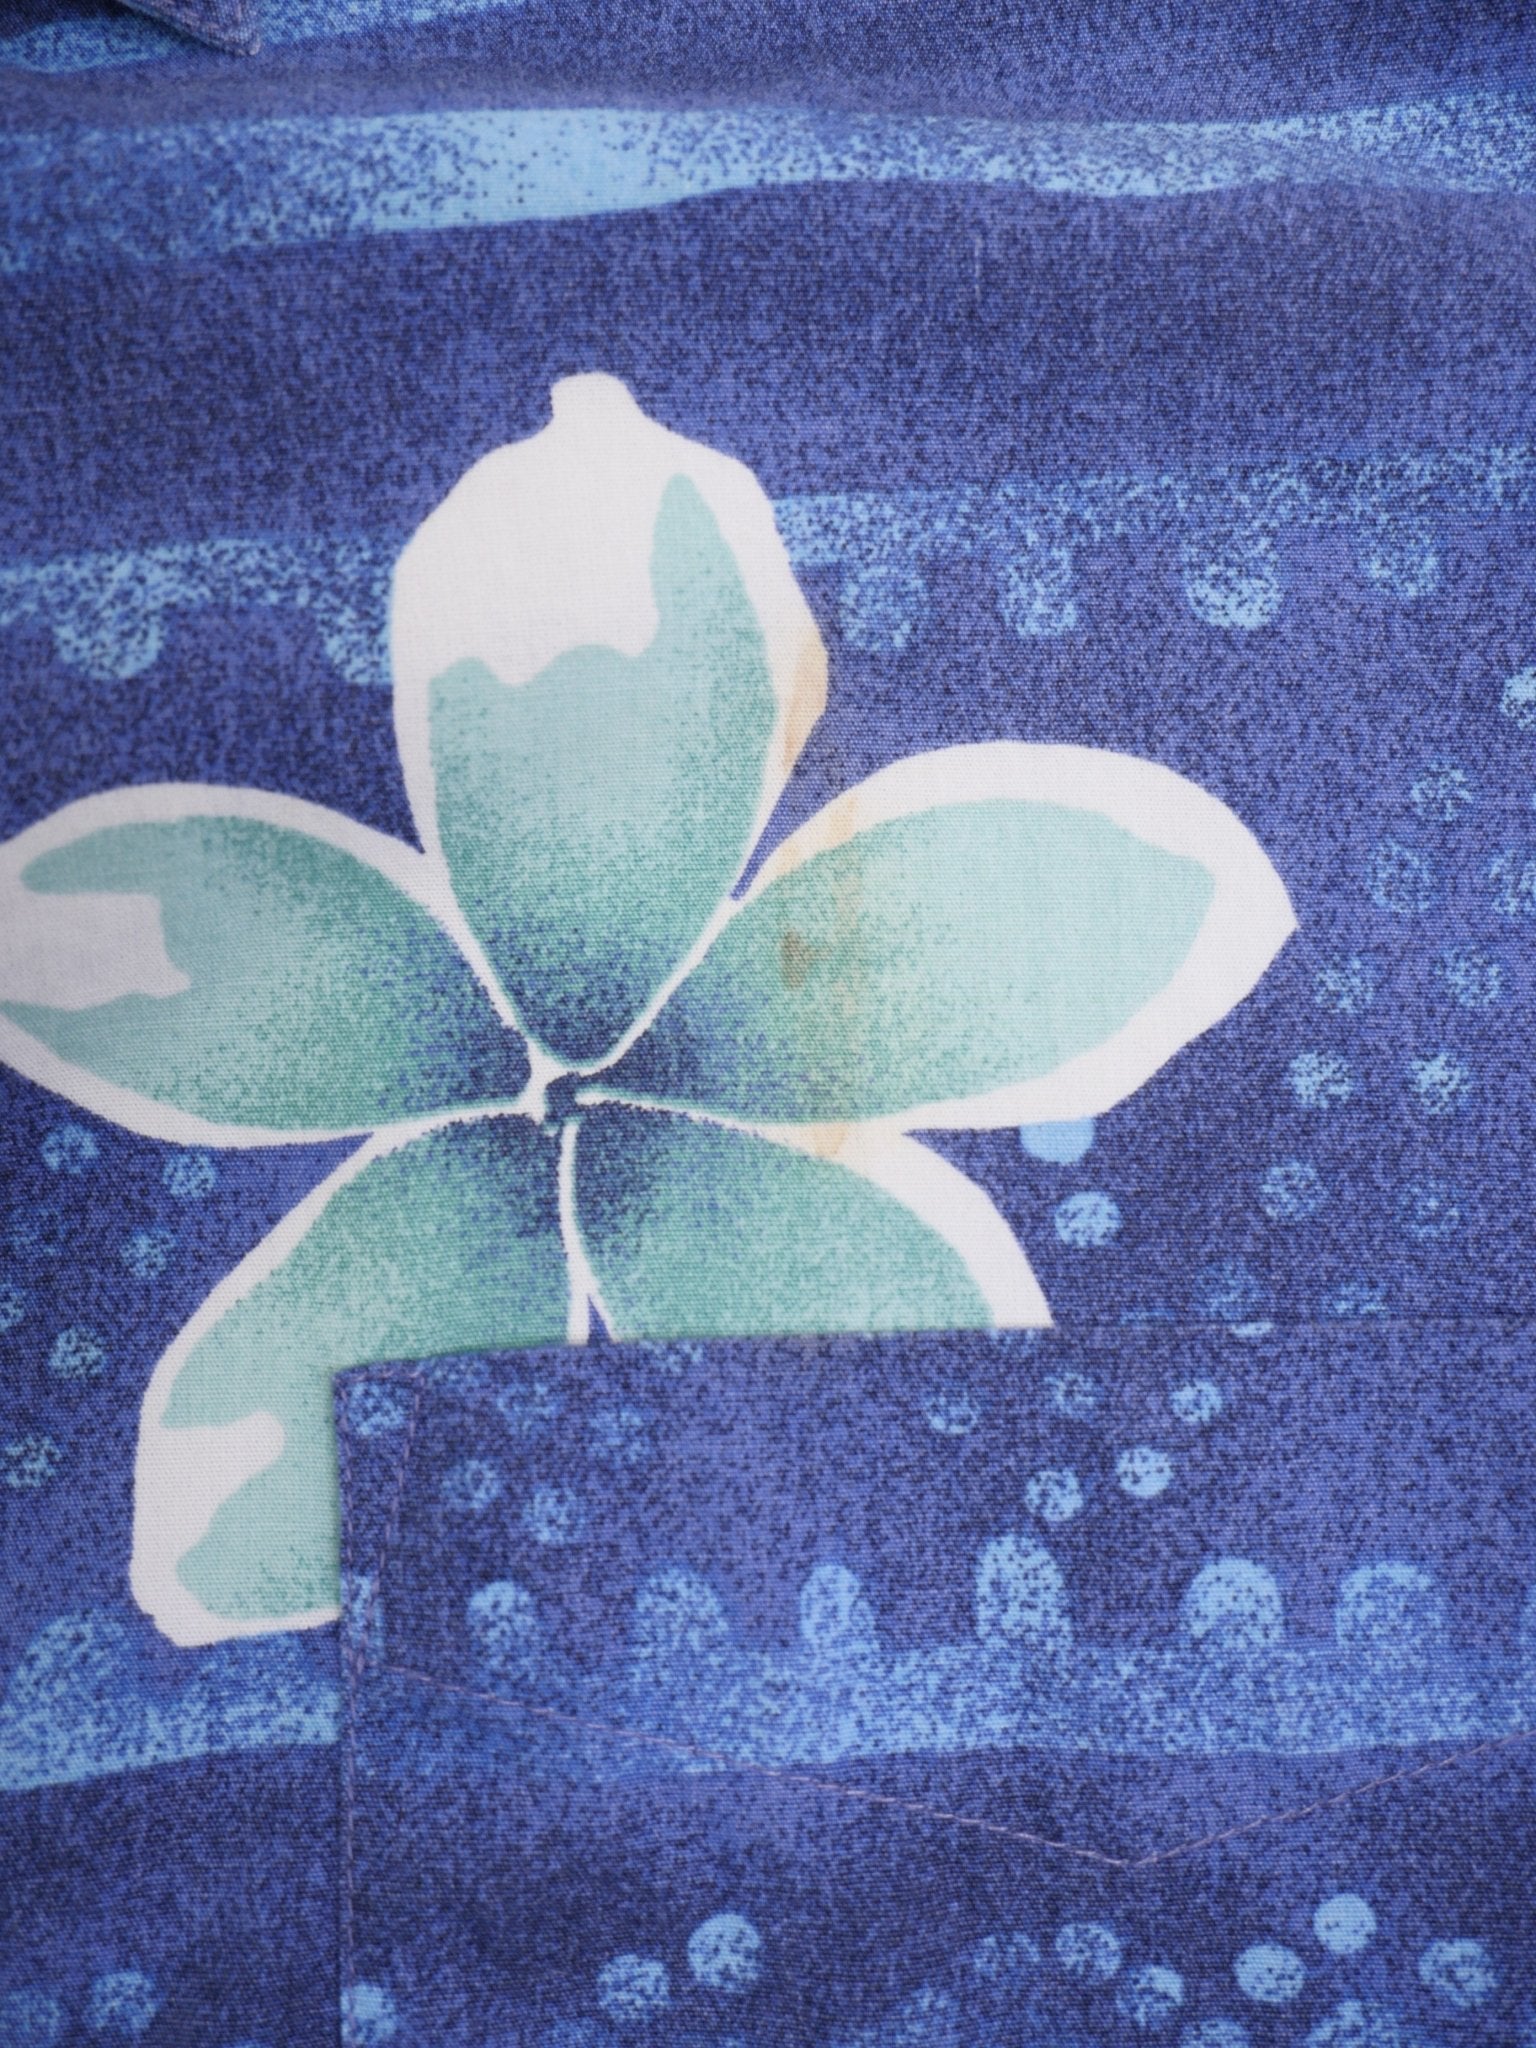 Blue Flower Graphic Vintage Hawaii Kurzarm Hemd - Peeces